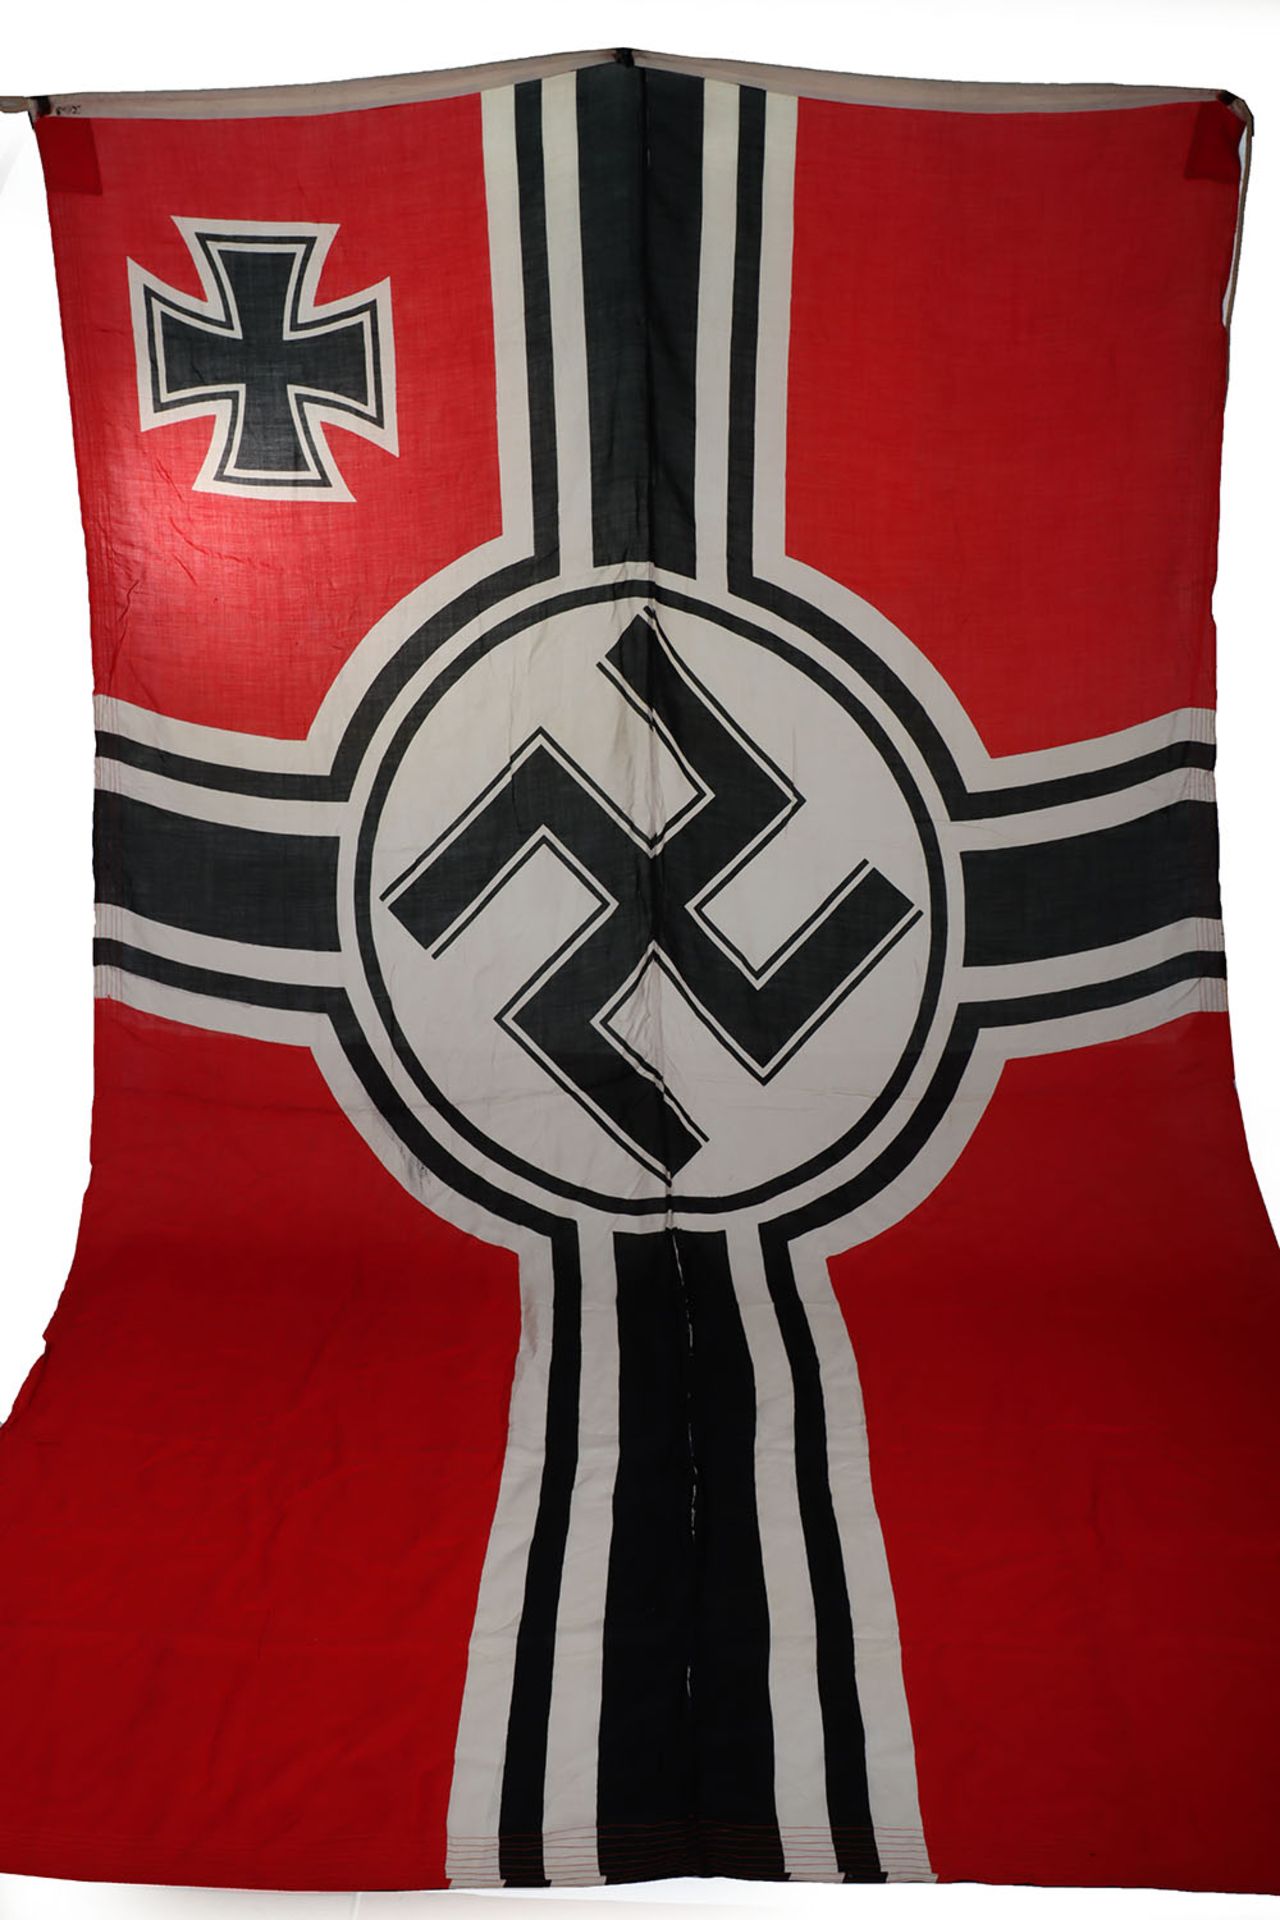 Large WW2 German Battle Flag (Reichskriegsflagge) - Image 11 of 11